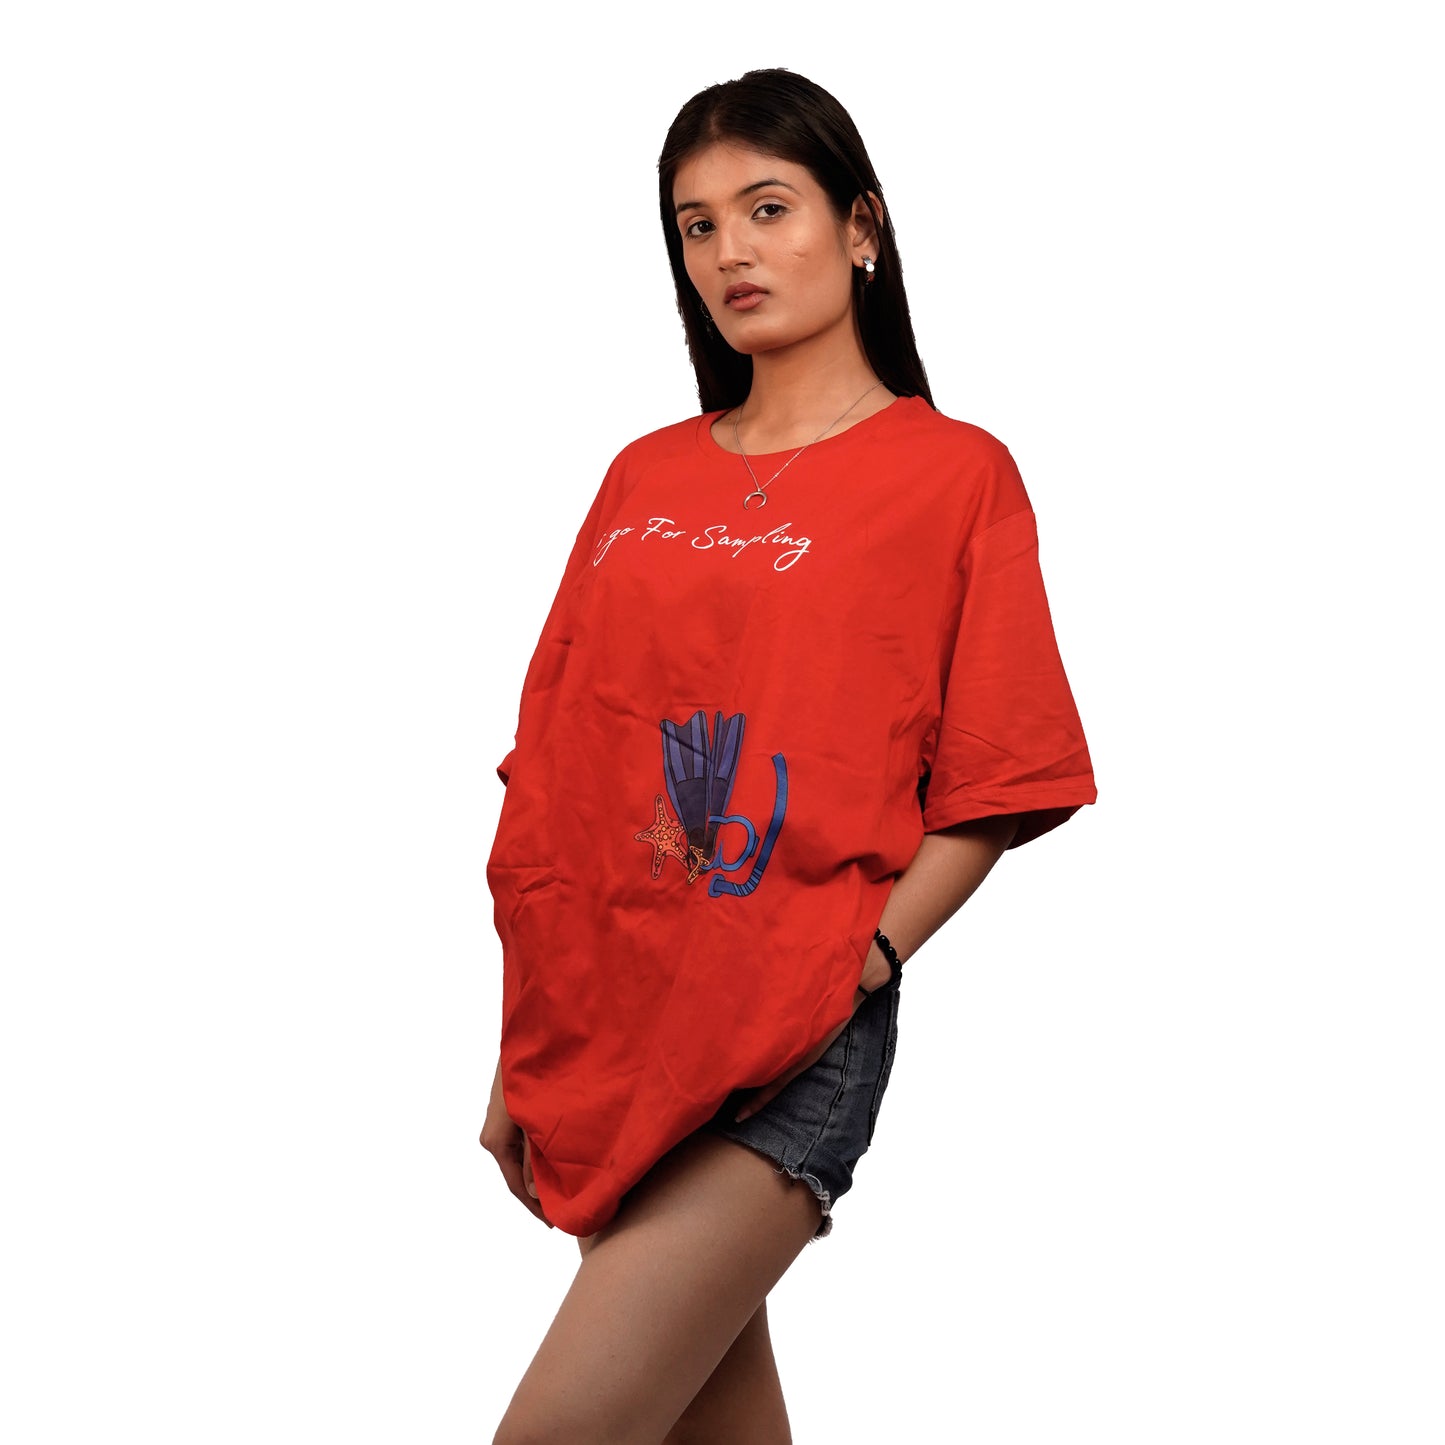 Let's Go For Sampling T-shirt In Red Color For Women